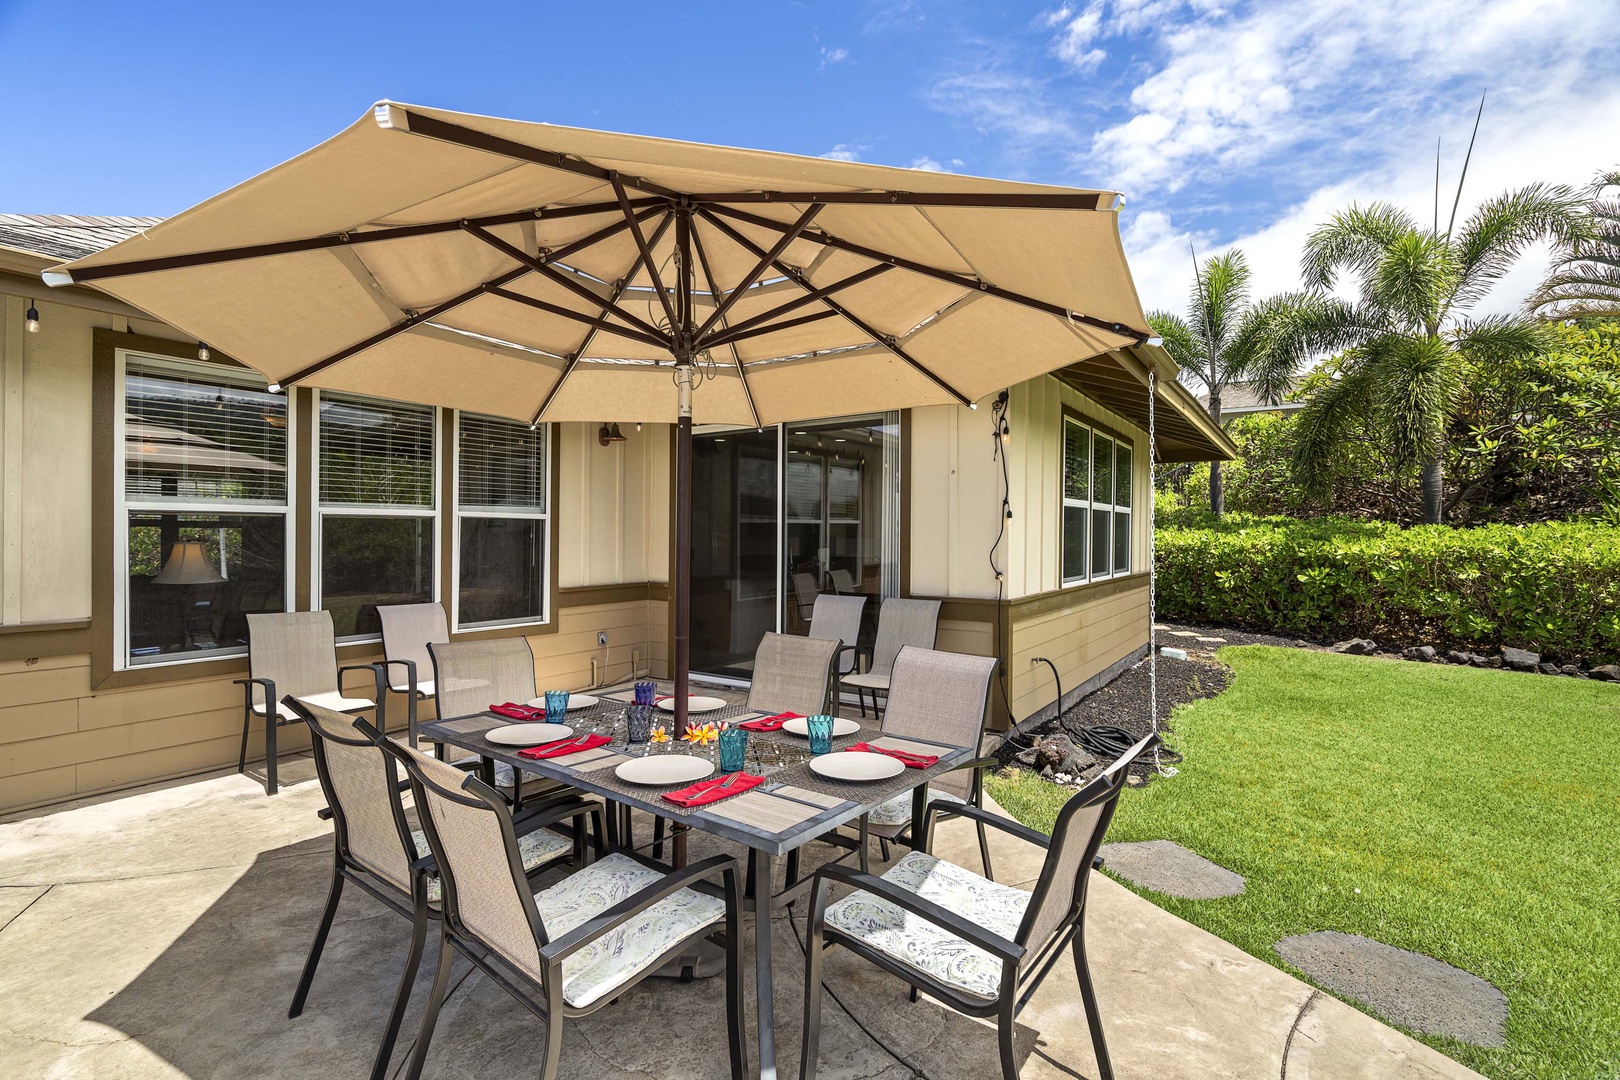 Kailua Kona Vacation Rentals, Kahakai Estates Hale - Experience outdoor dining at its finest on this beautiful lanai.